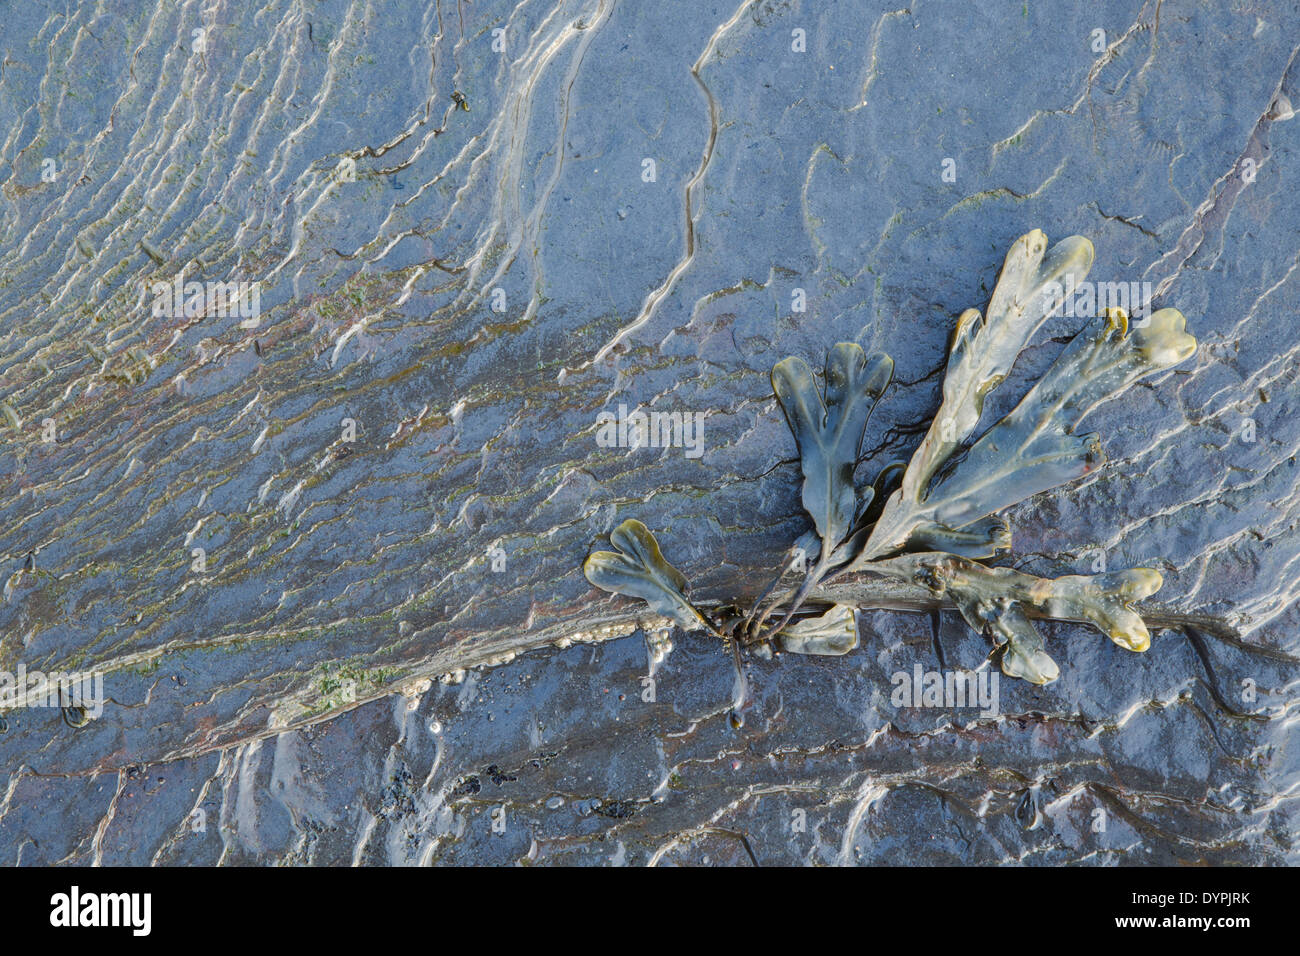 Bladder Wrack seaweed, Latin name Fucus vesiculosus, lying on a wave cut platform Stock Photo